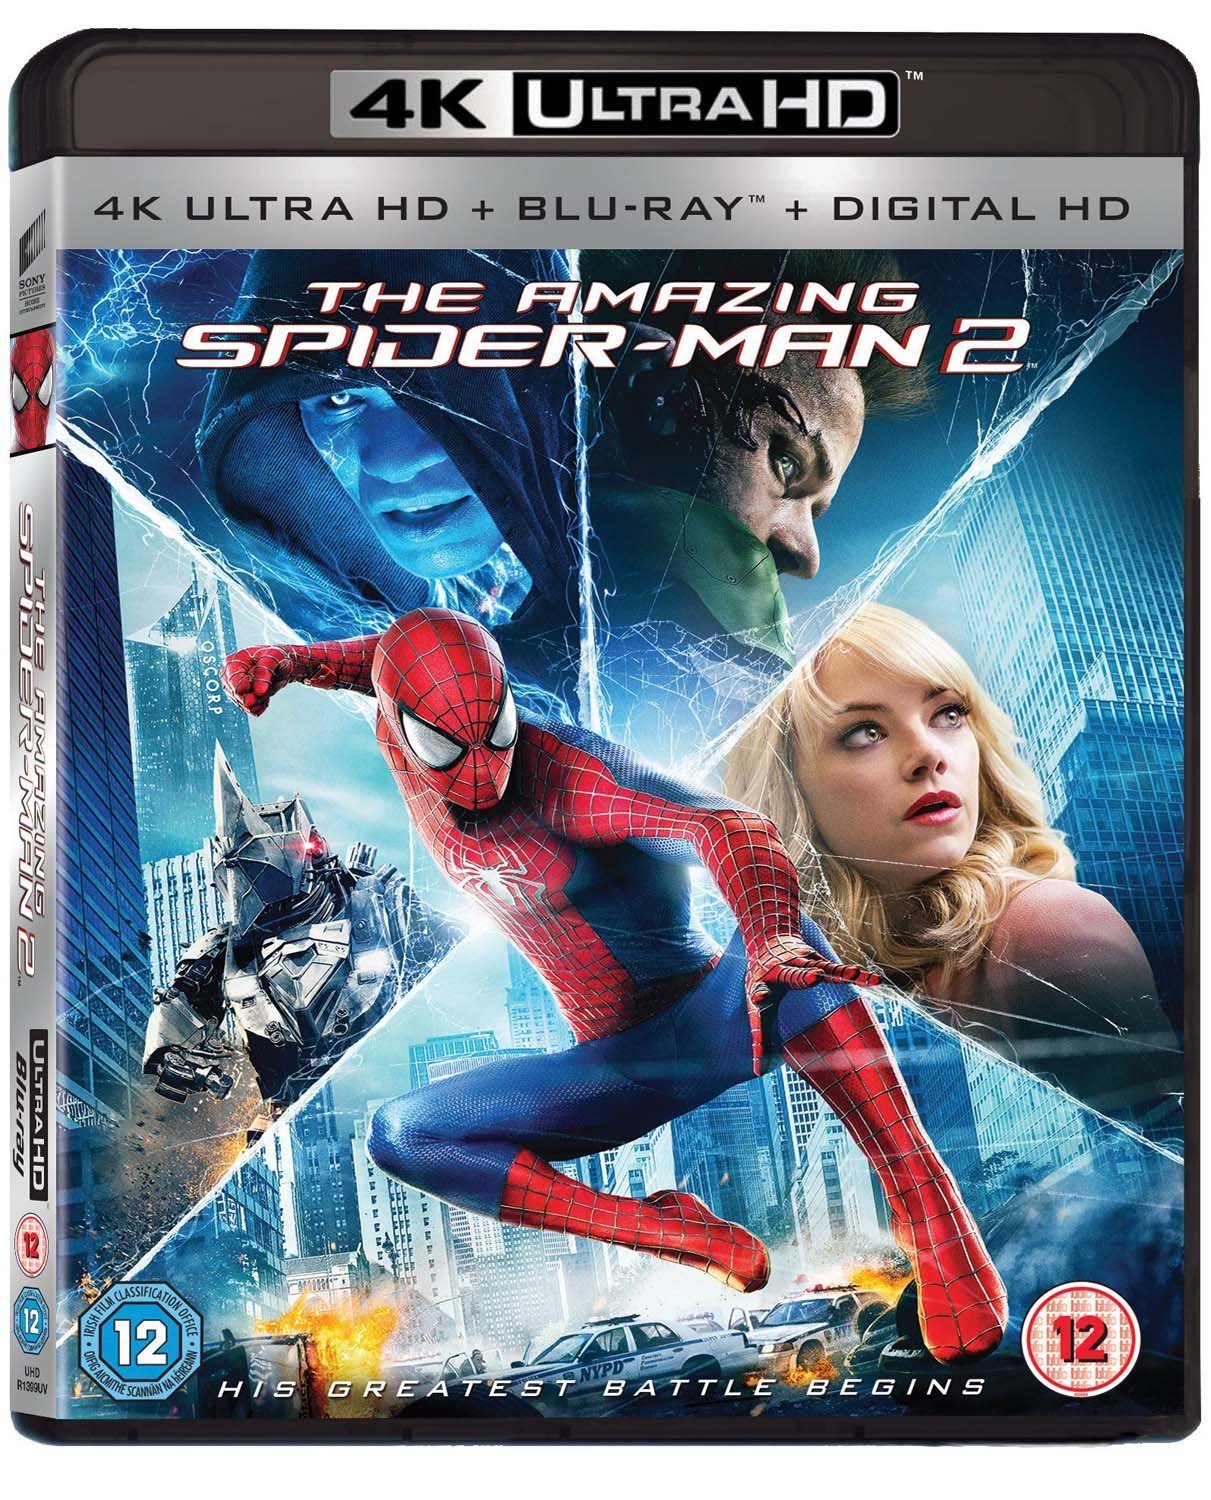 The Amazing Spider-Man 2 (2 Disc 4K UHD & Blu-ray)